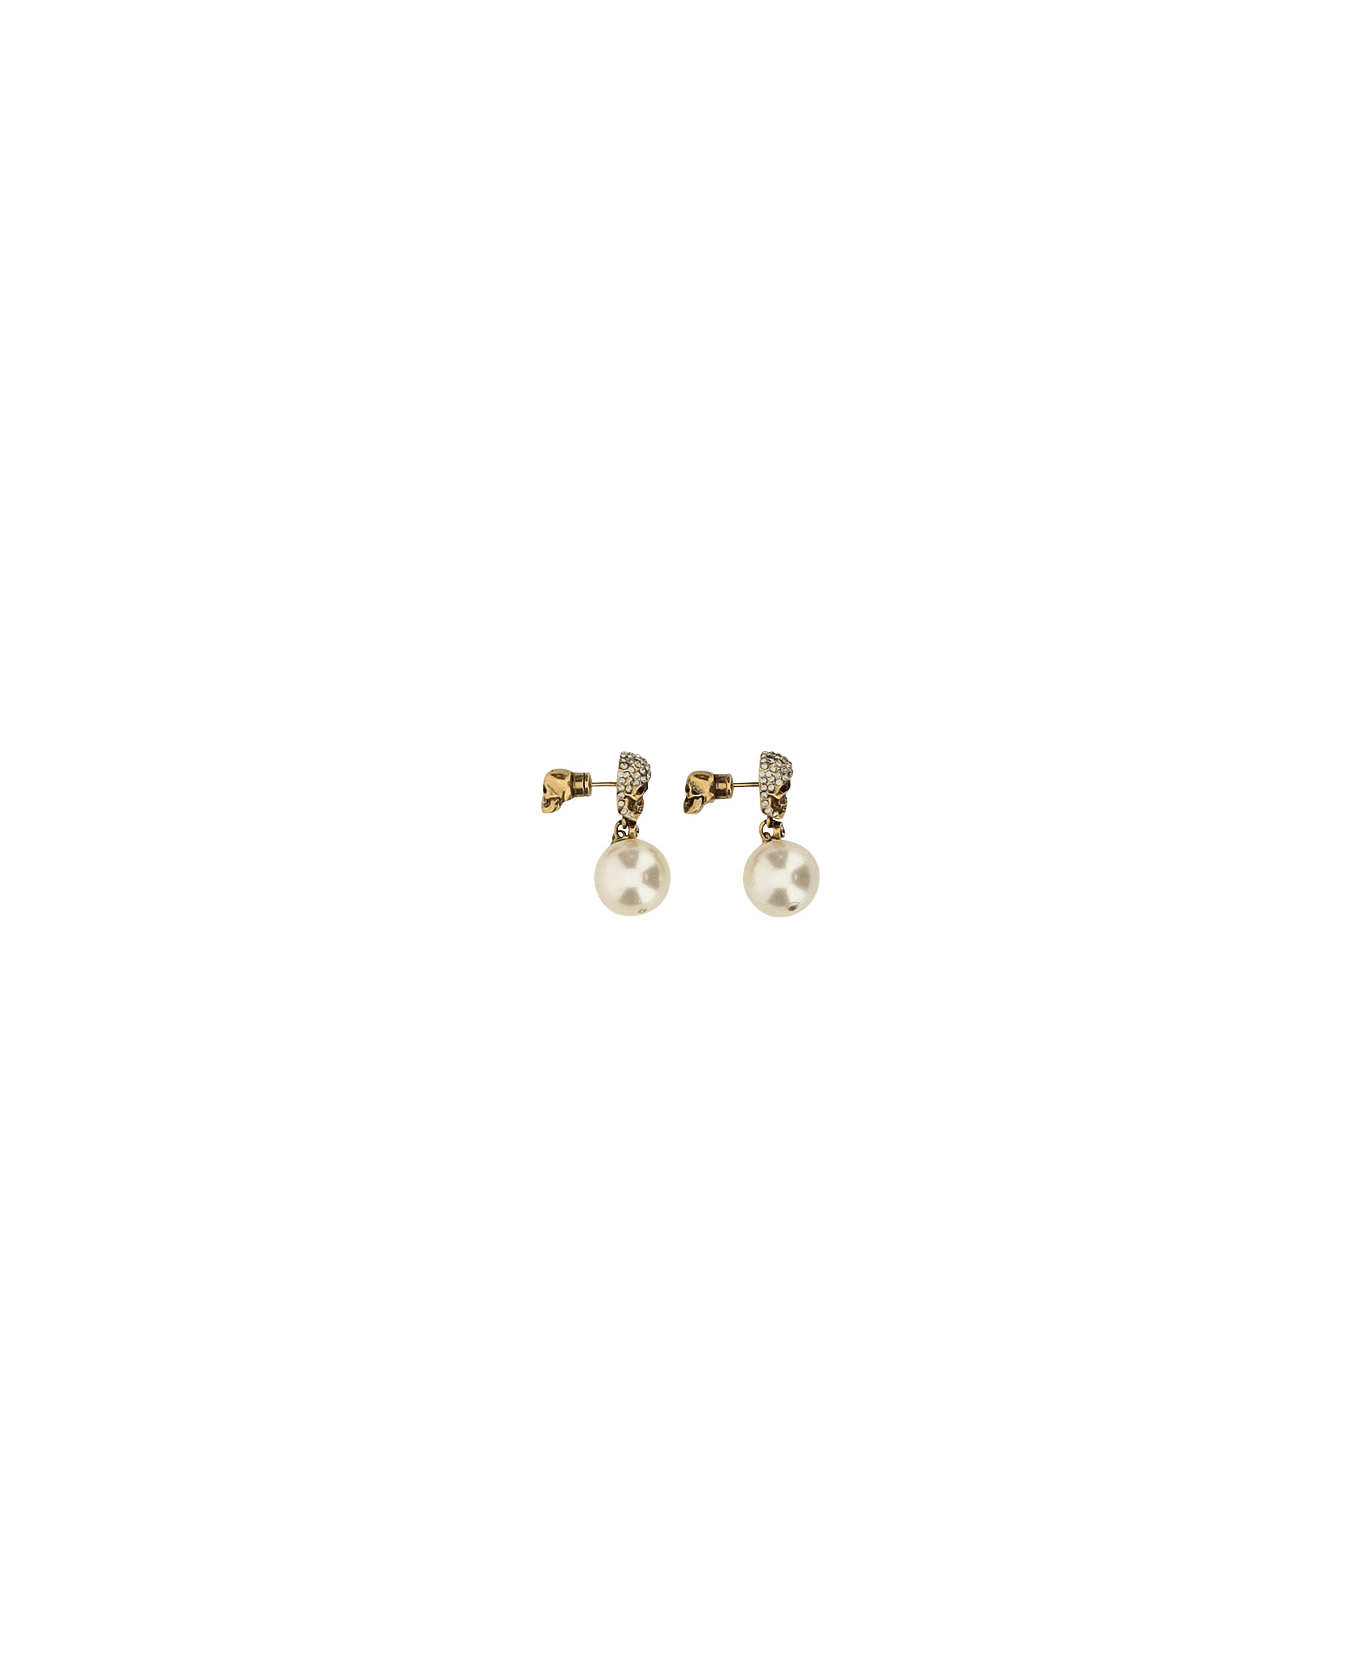 Alexander McQueen Pearl Earrings - Antique gold イヤリング